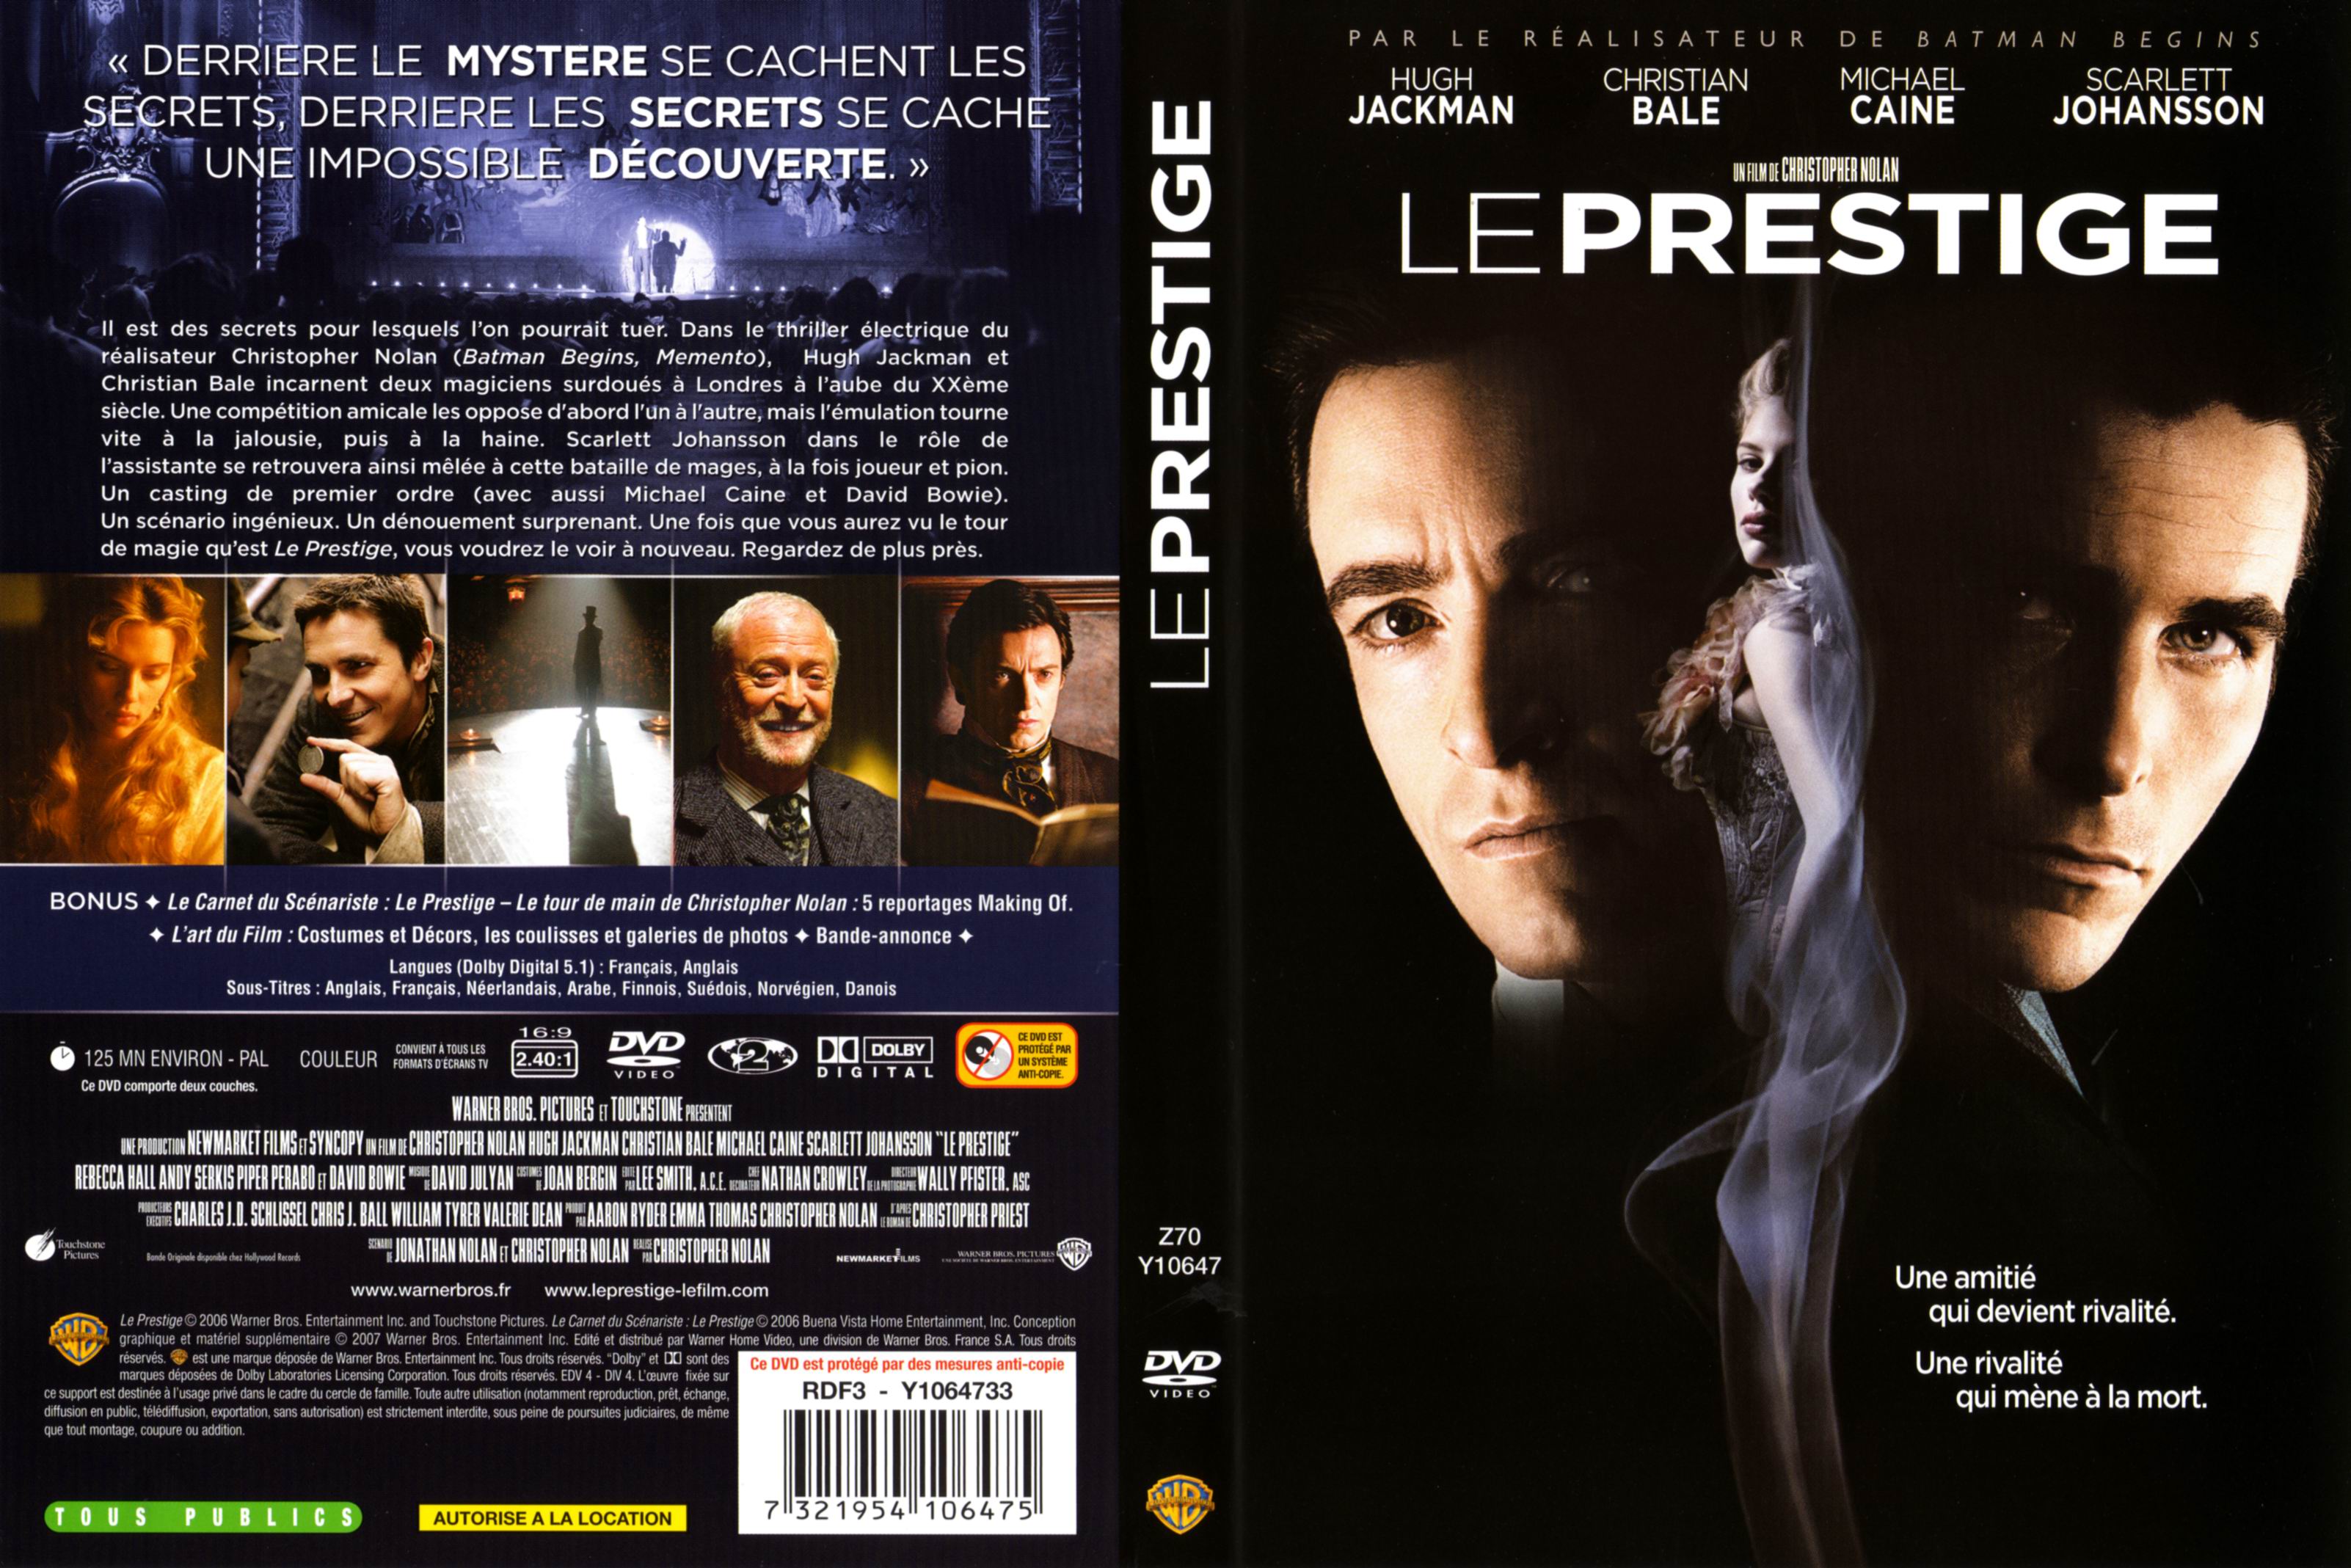 Jaquette DVD Le prestige